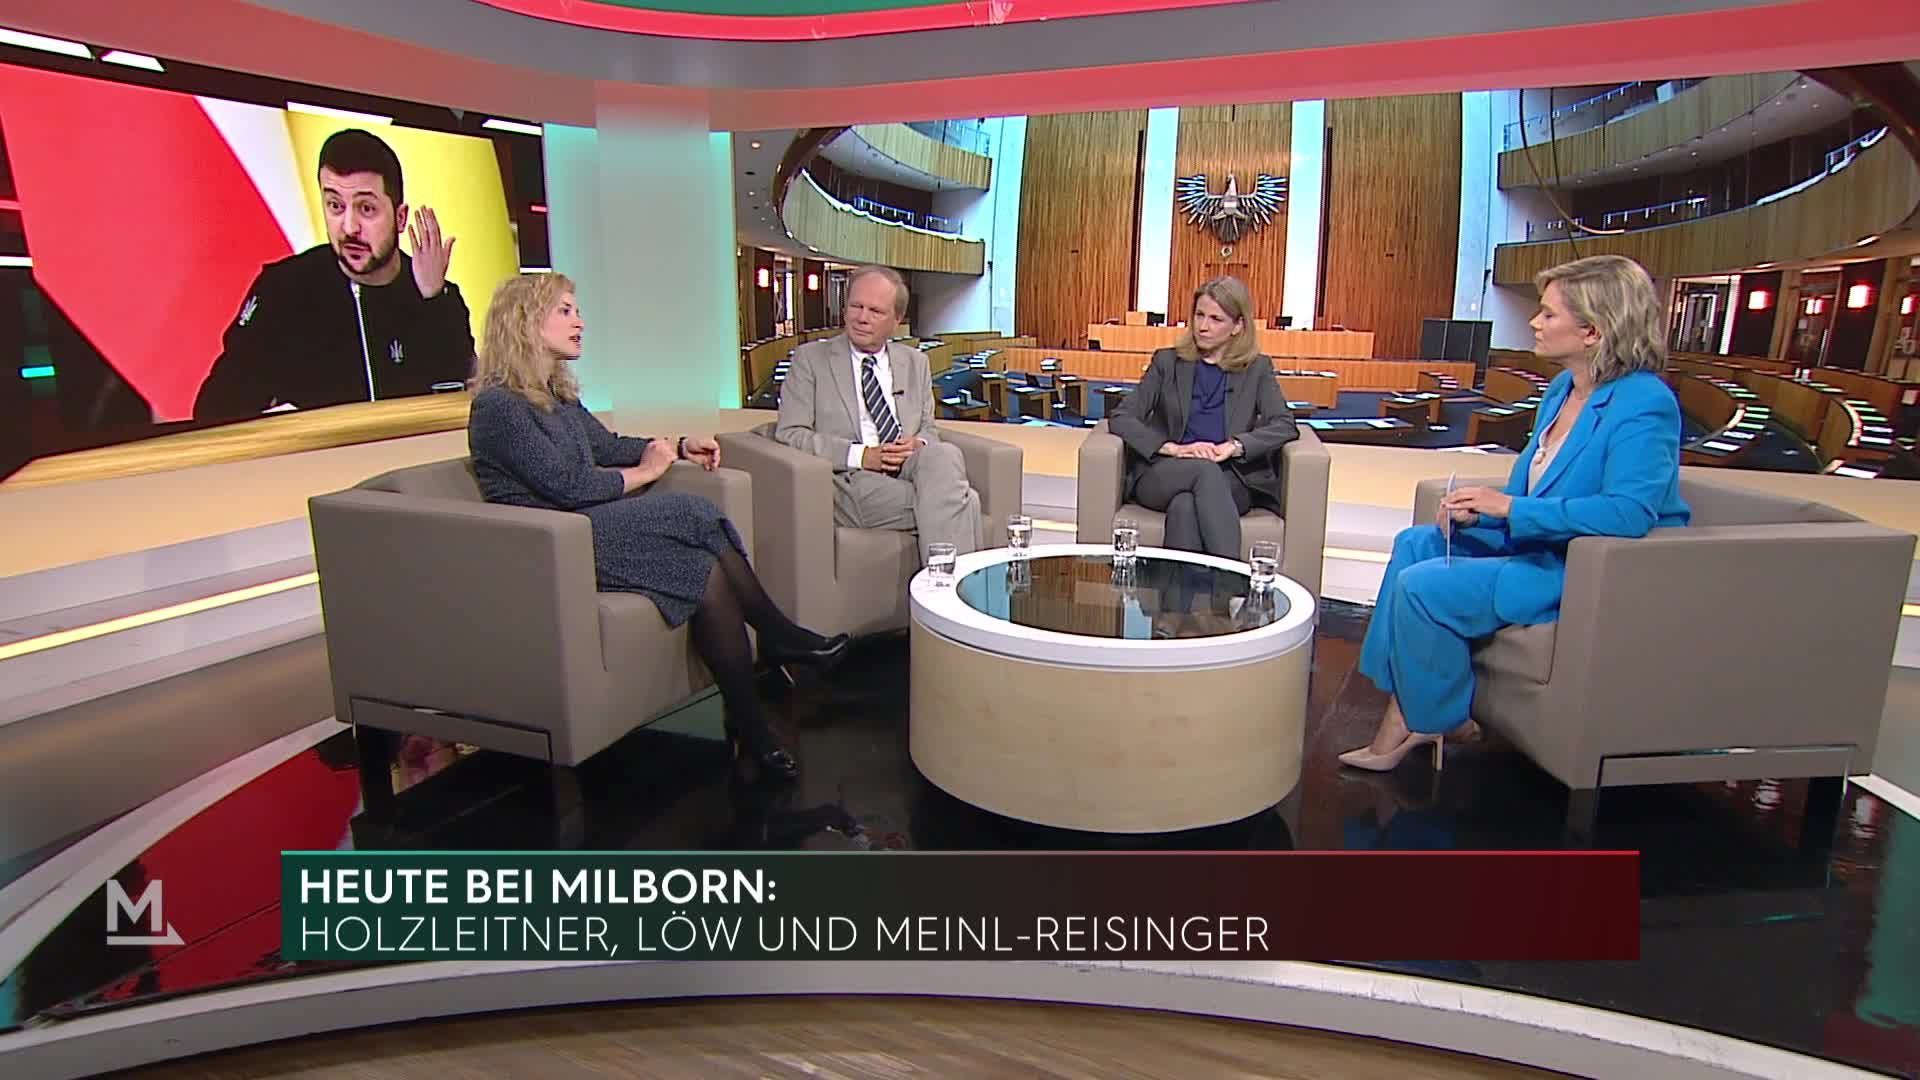 Meinl-Reisinger, Holzleitner, Löw im Interview bei Milborn